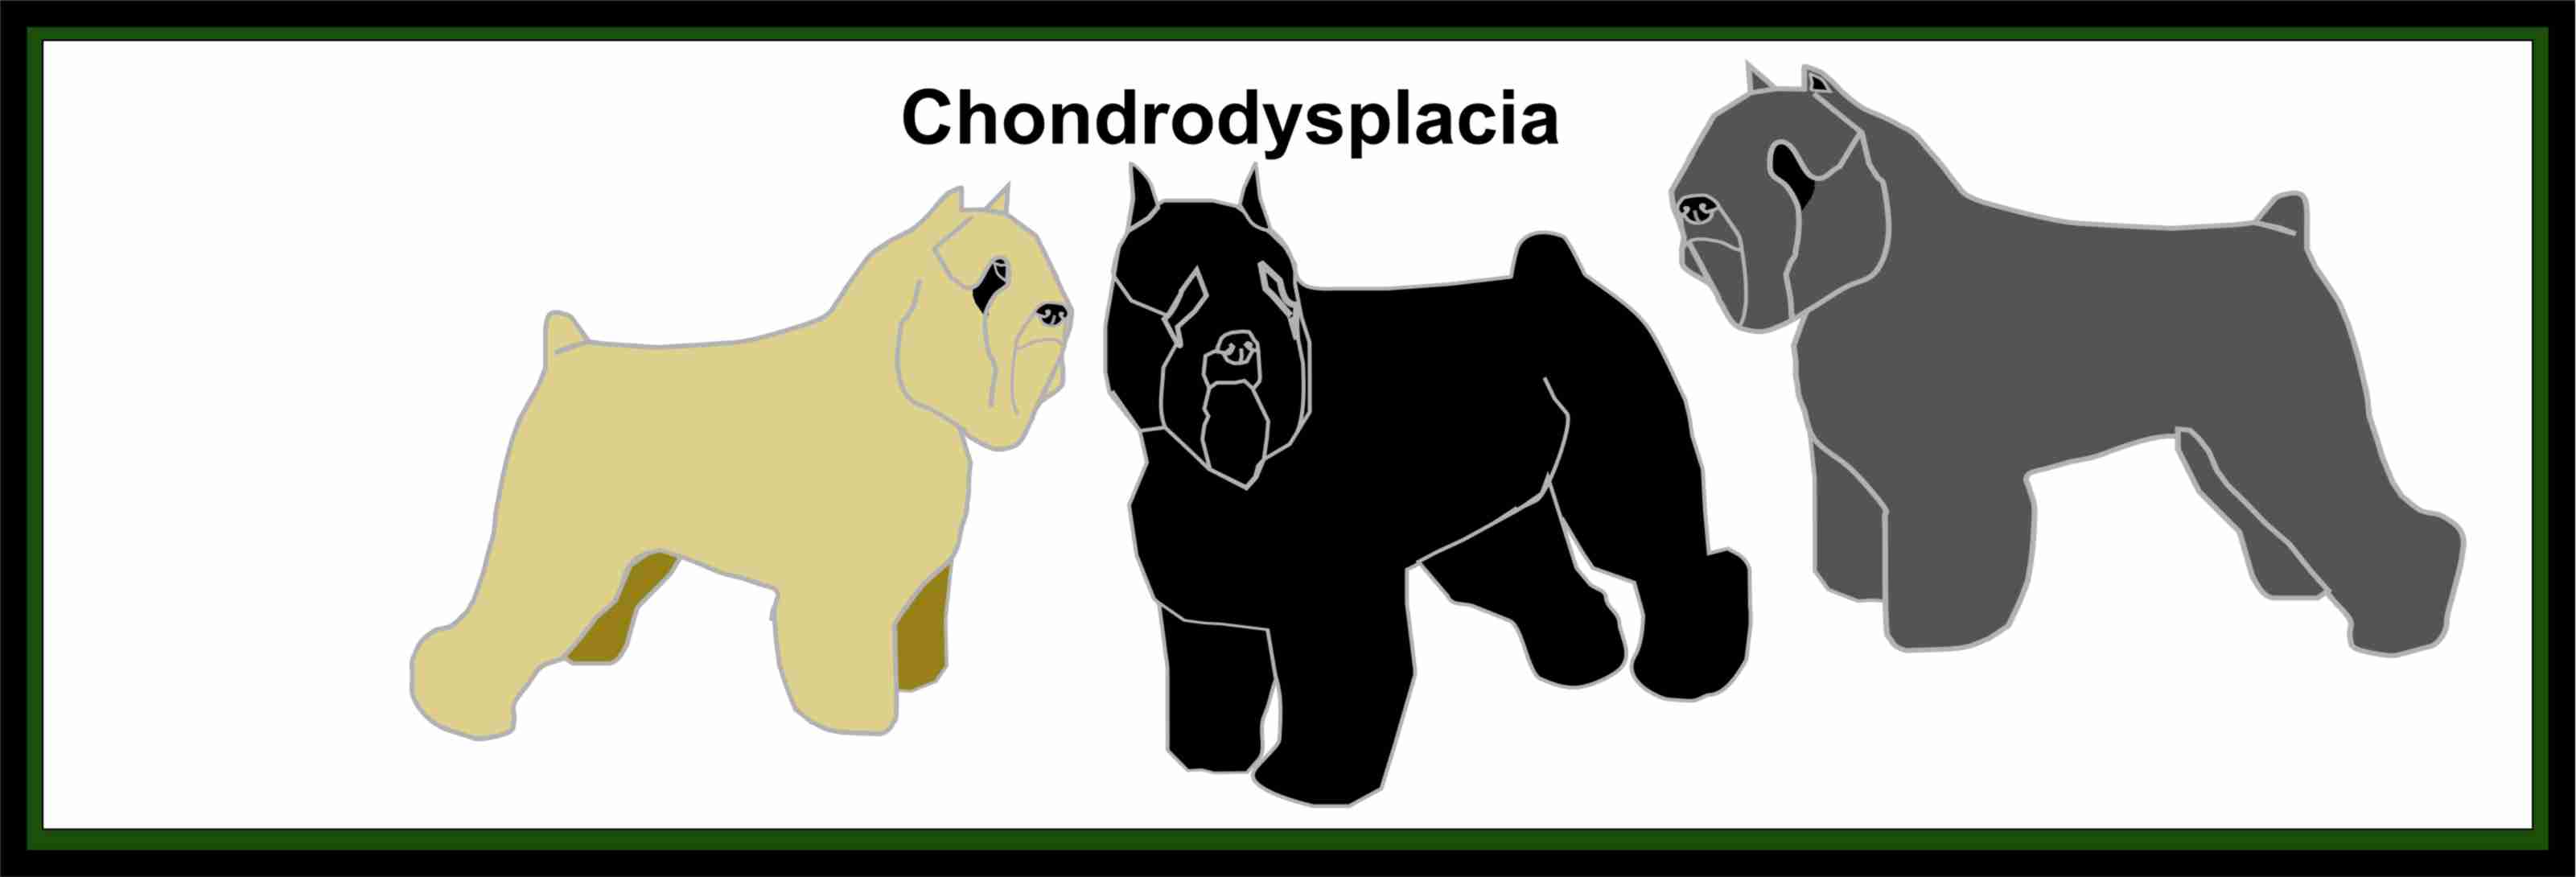 CHONDRODYSPLACIA